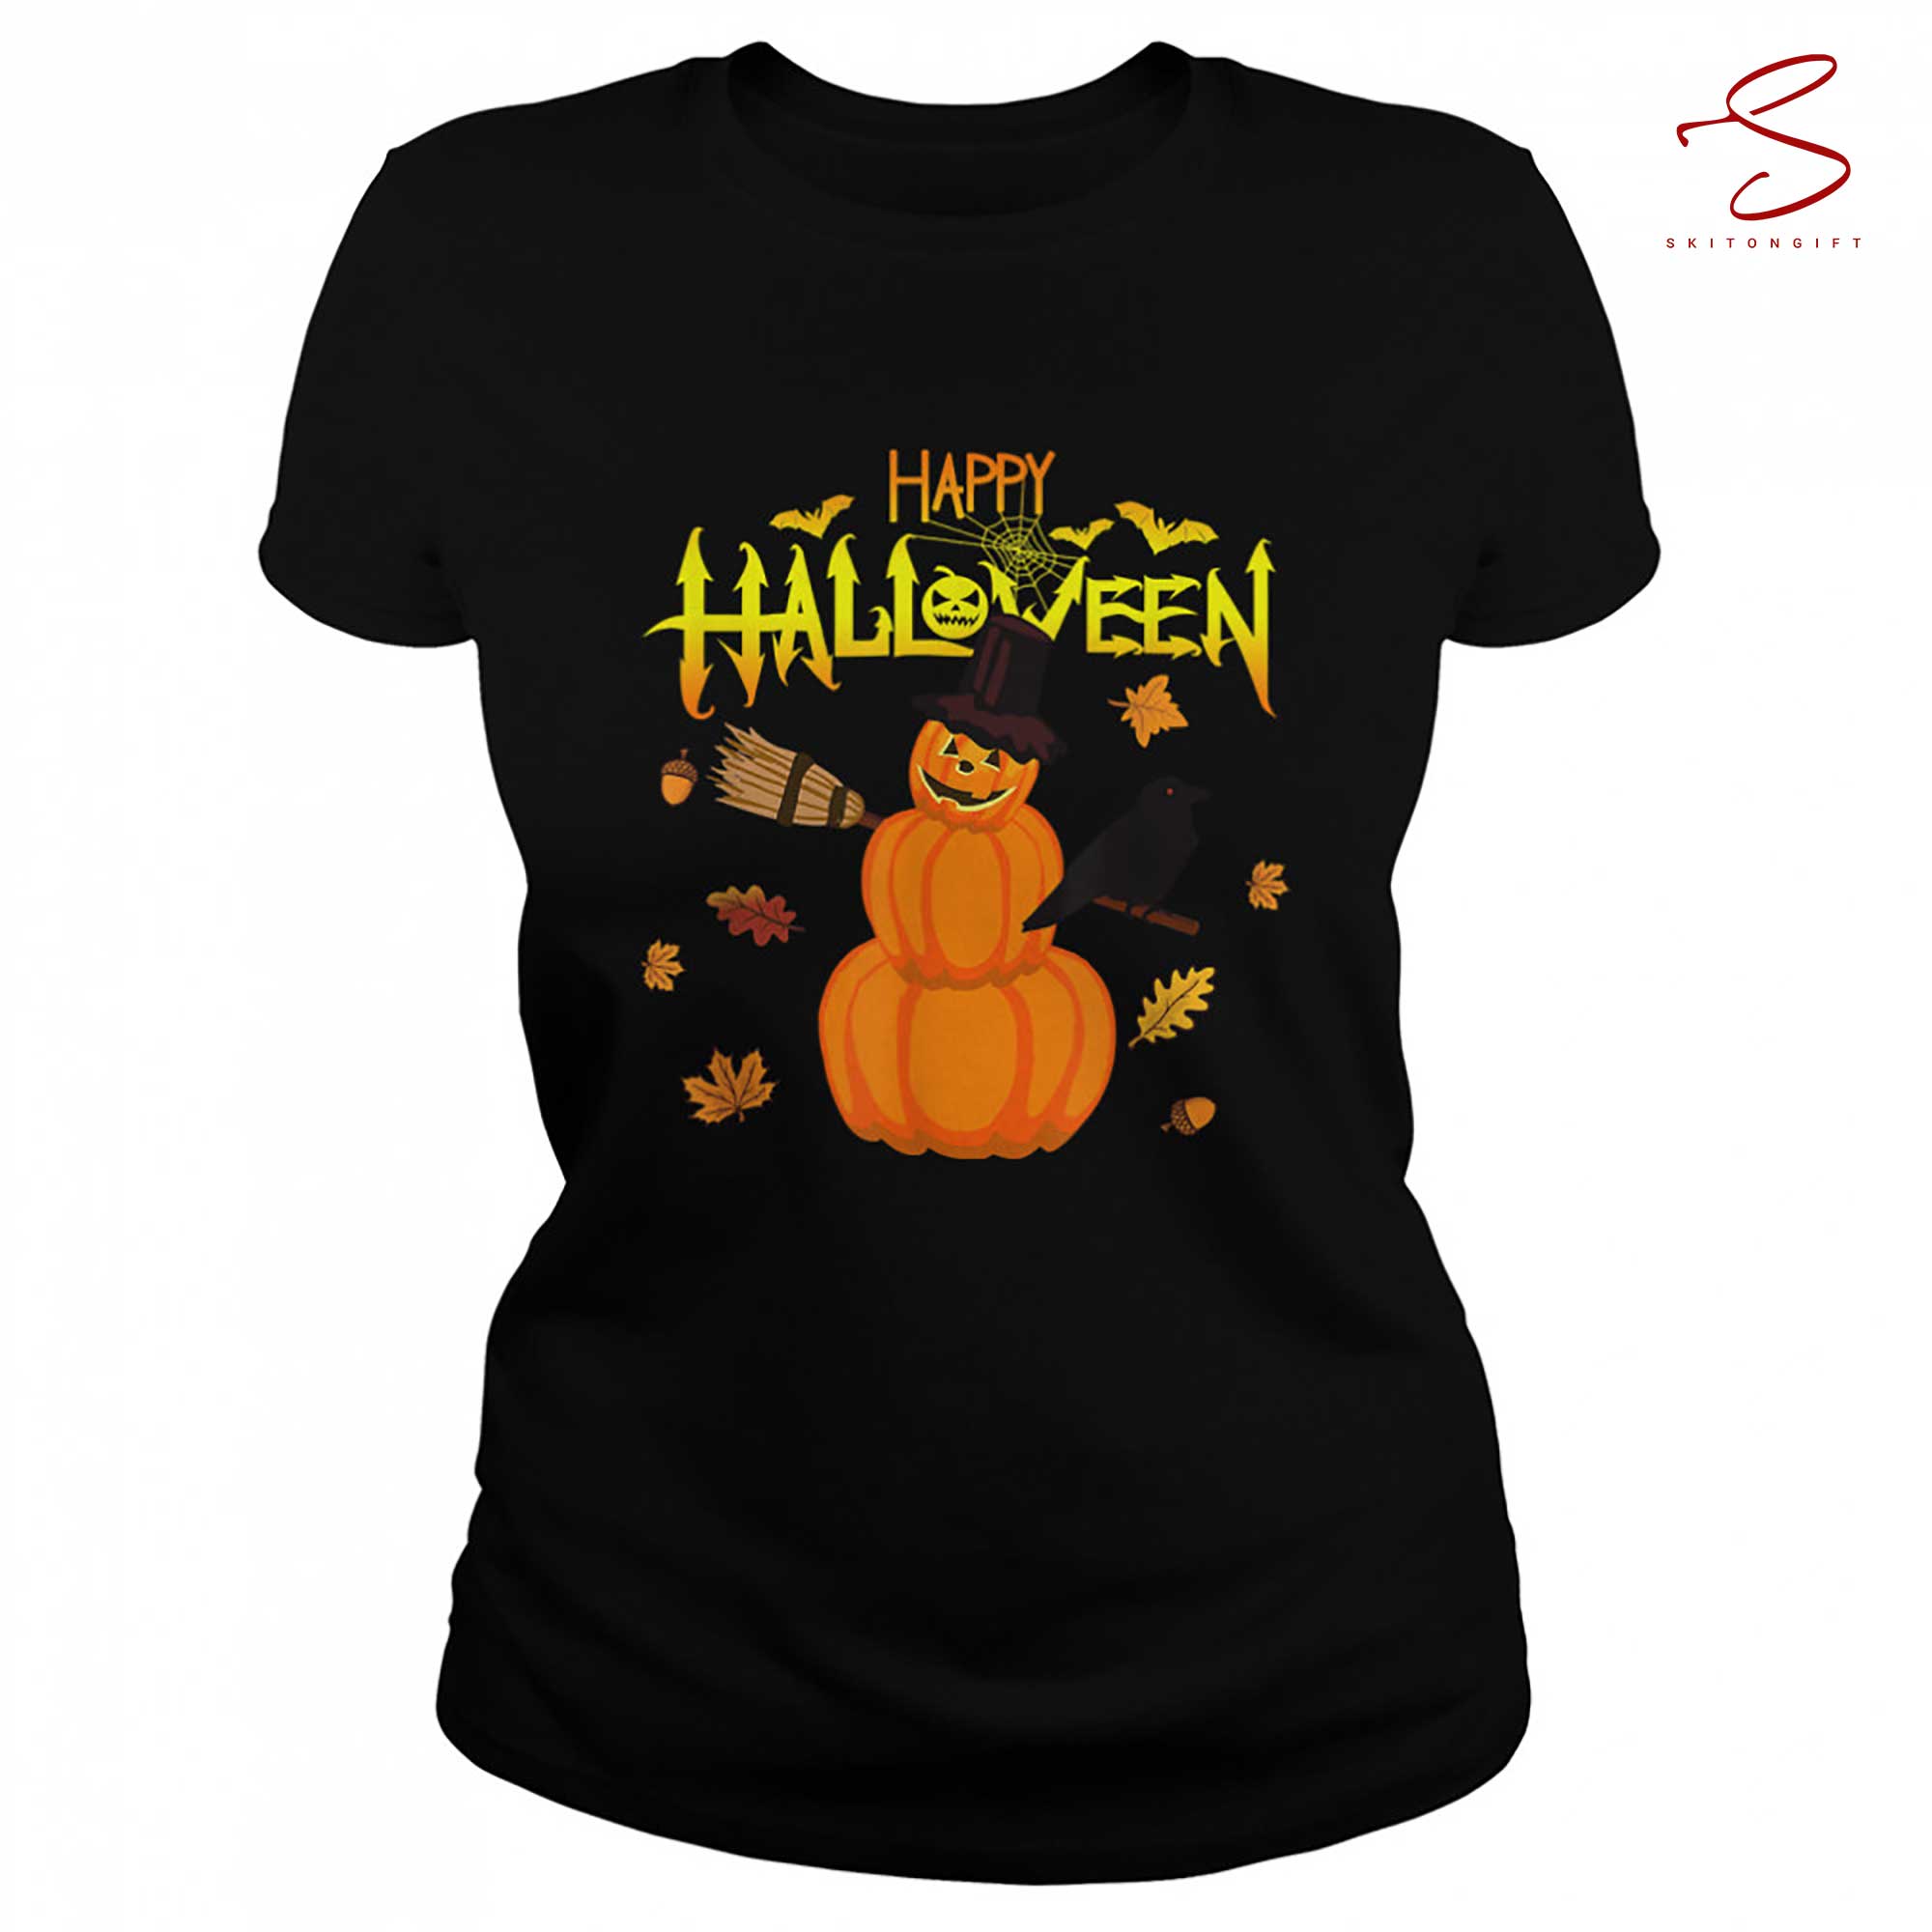 Skitongift Trick Or Treat Halloween Shirt, Pumpkin Happy Halloween T Shirt Funny Shirts Hoodie Long Short Sleeve Casual Shirt